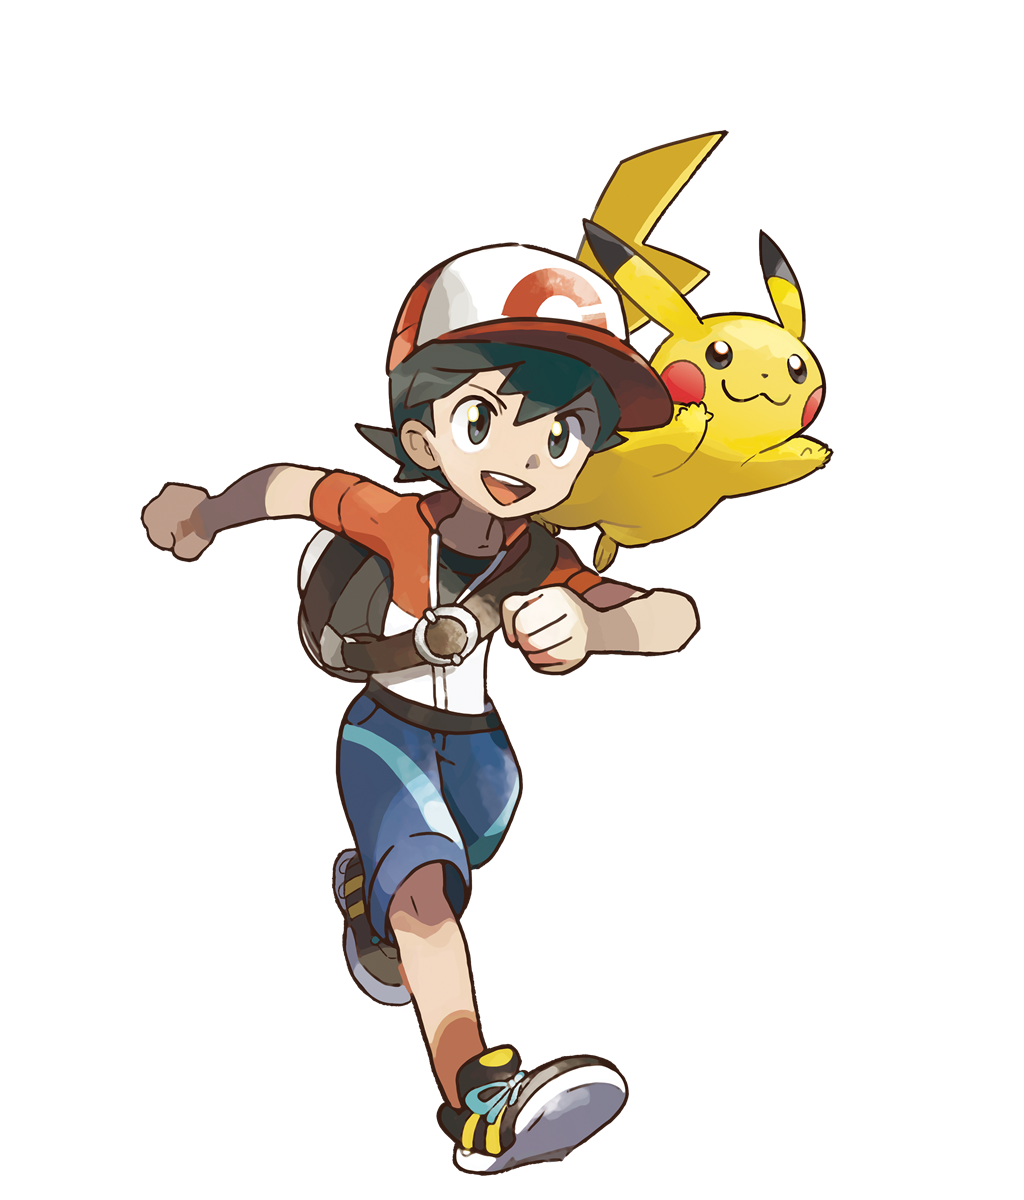 Héros Pokémon Let's Go Pikachu et Pokémon Let's Go Évoli